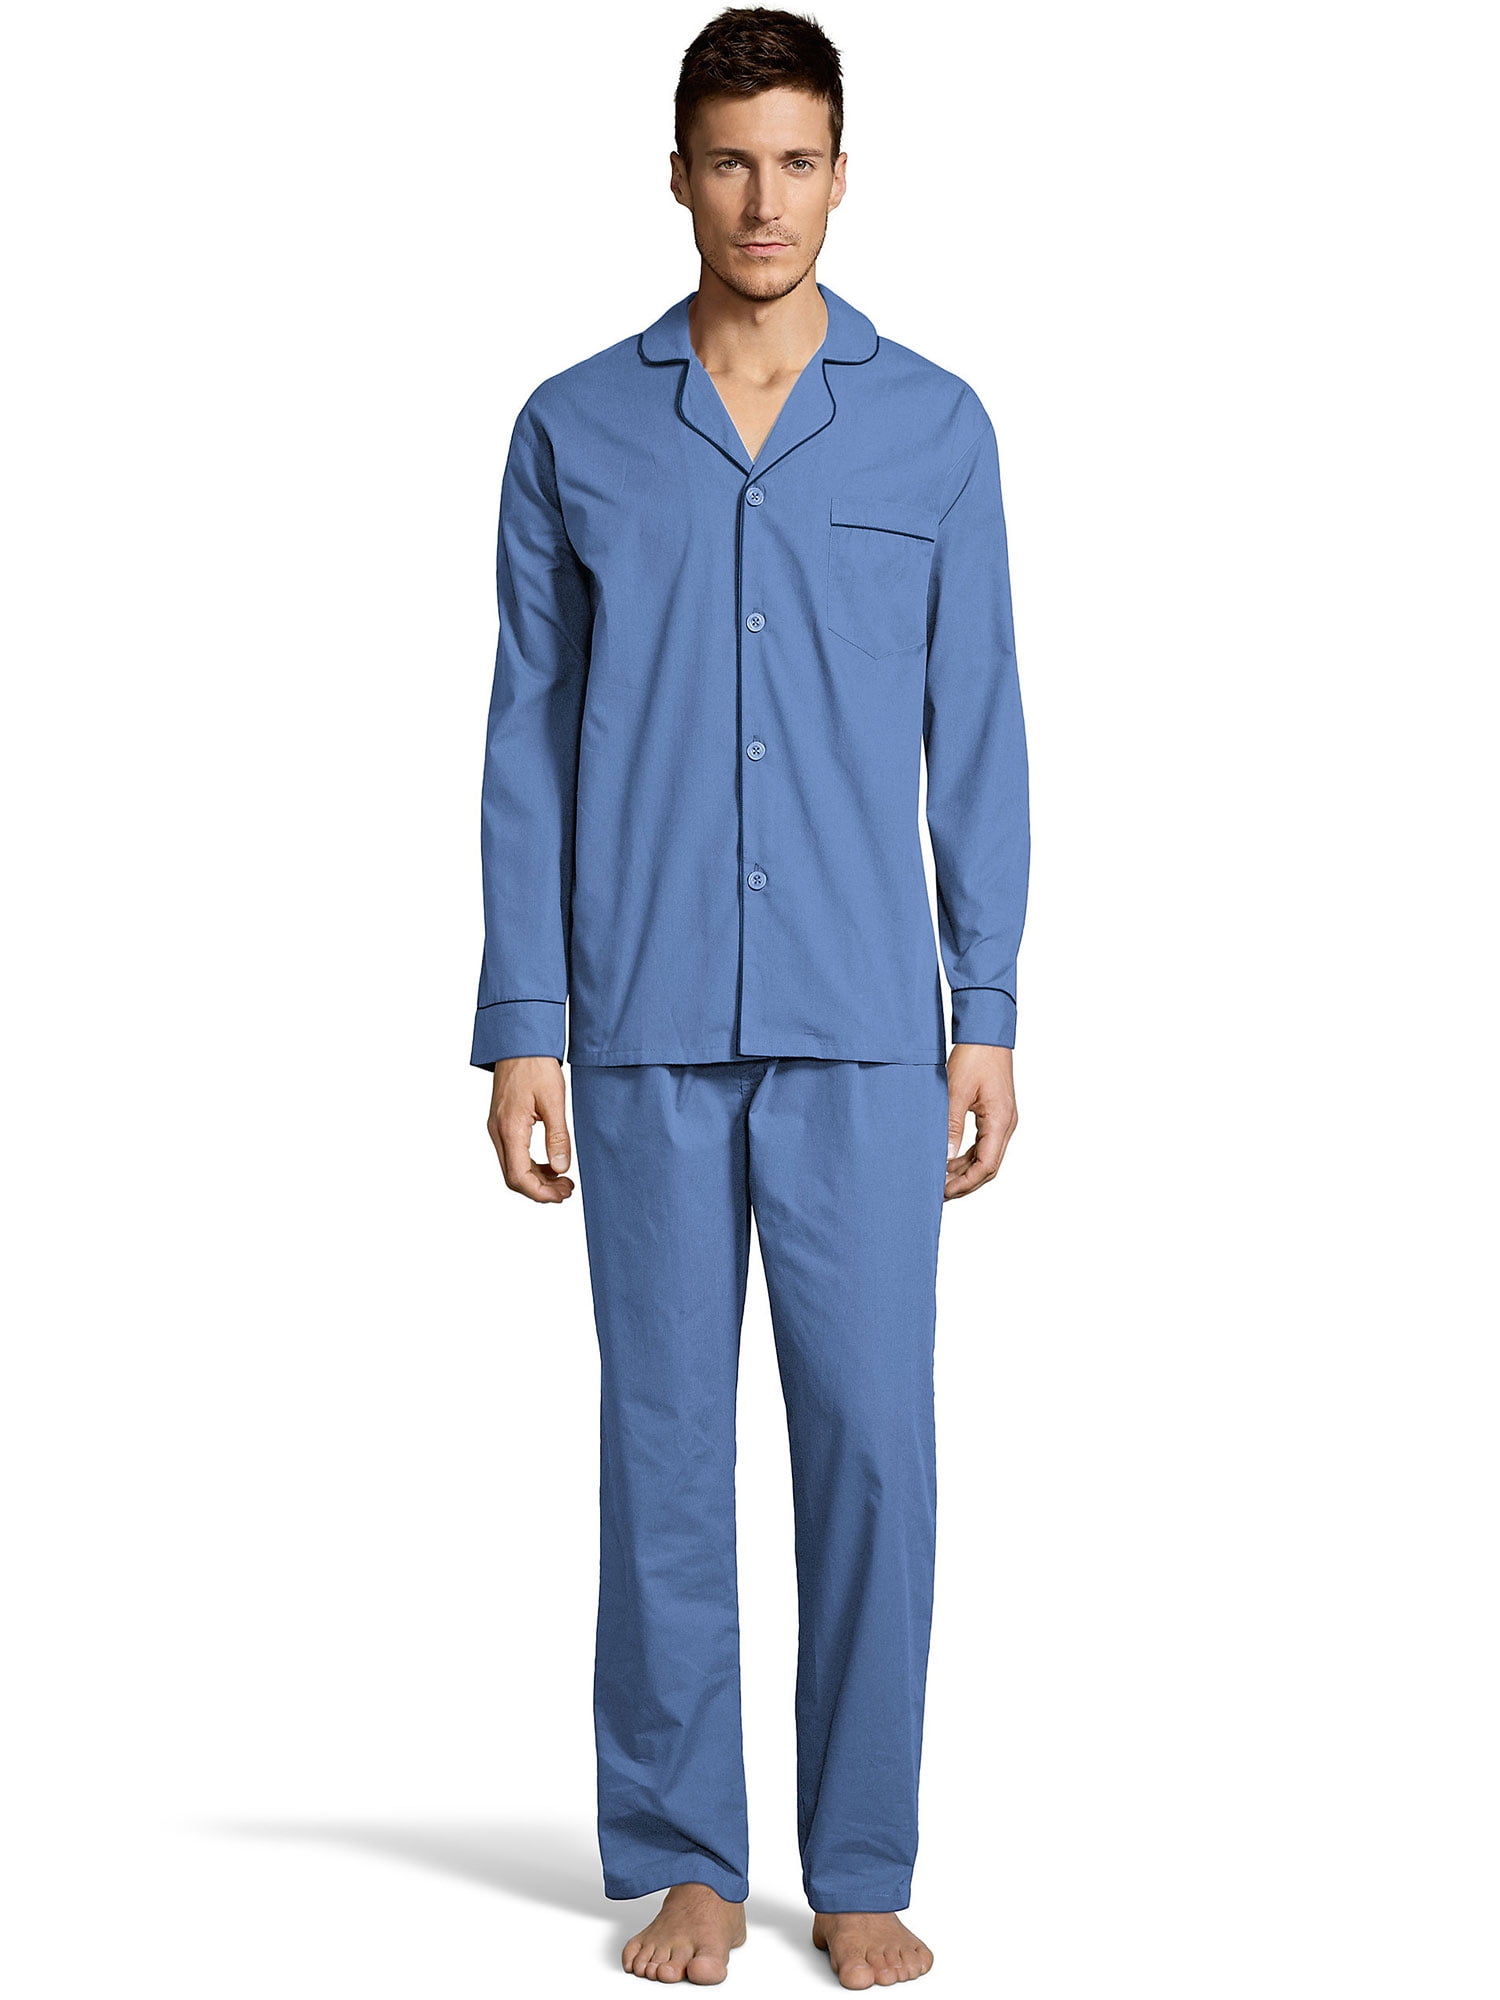 SELX Men Comfy Ice Silk Printed 2 Pcs Outfits Long Sleeve Pajamas Set